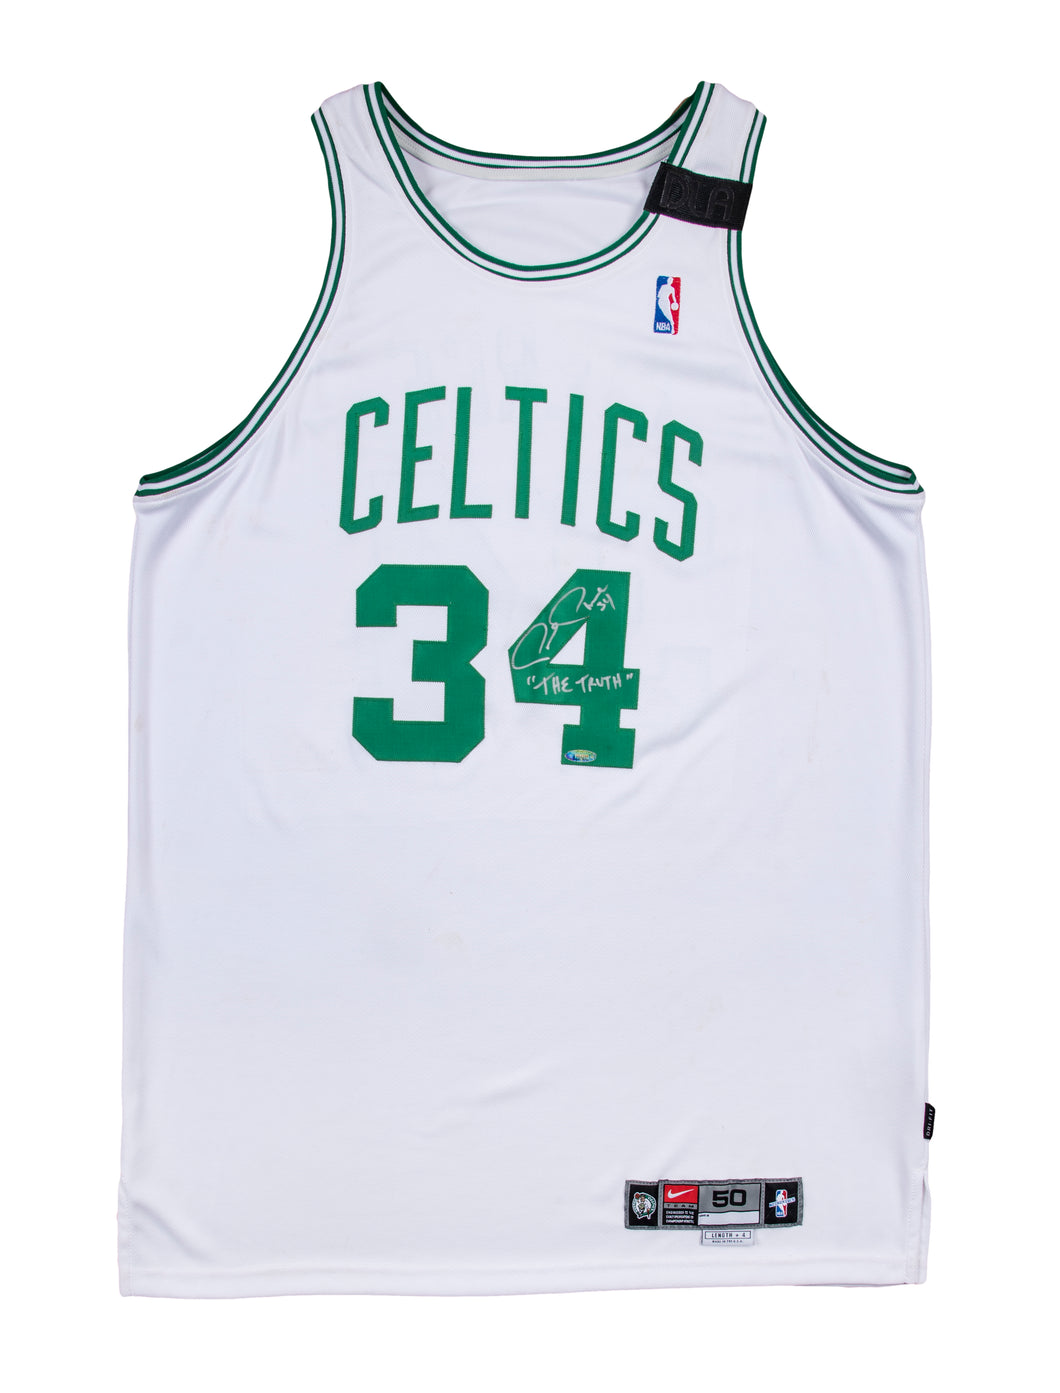 Adidas NBA Celtics Paul Pierce Jersey for Sale in Denver, CO - OfferUp